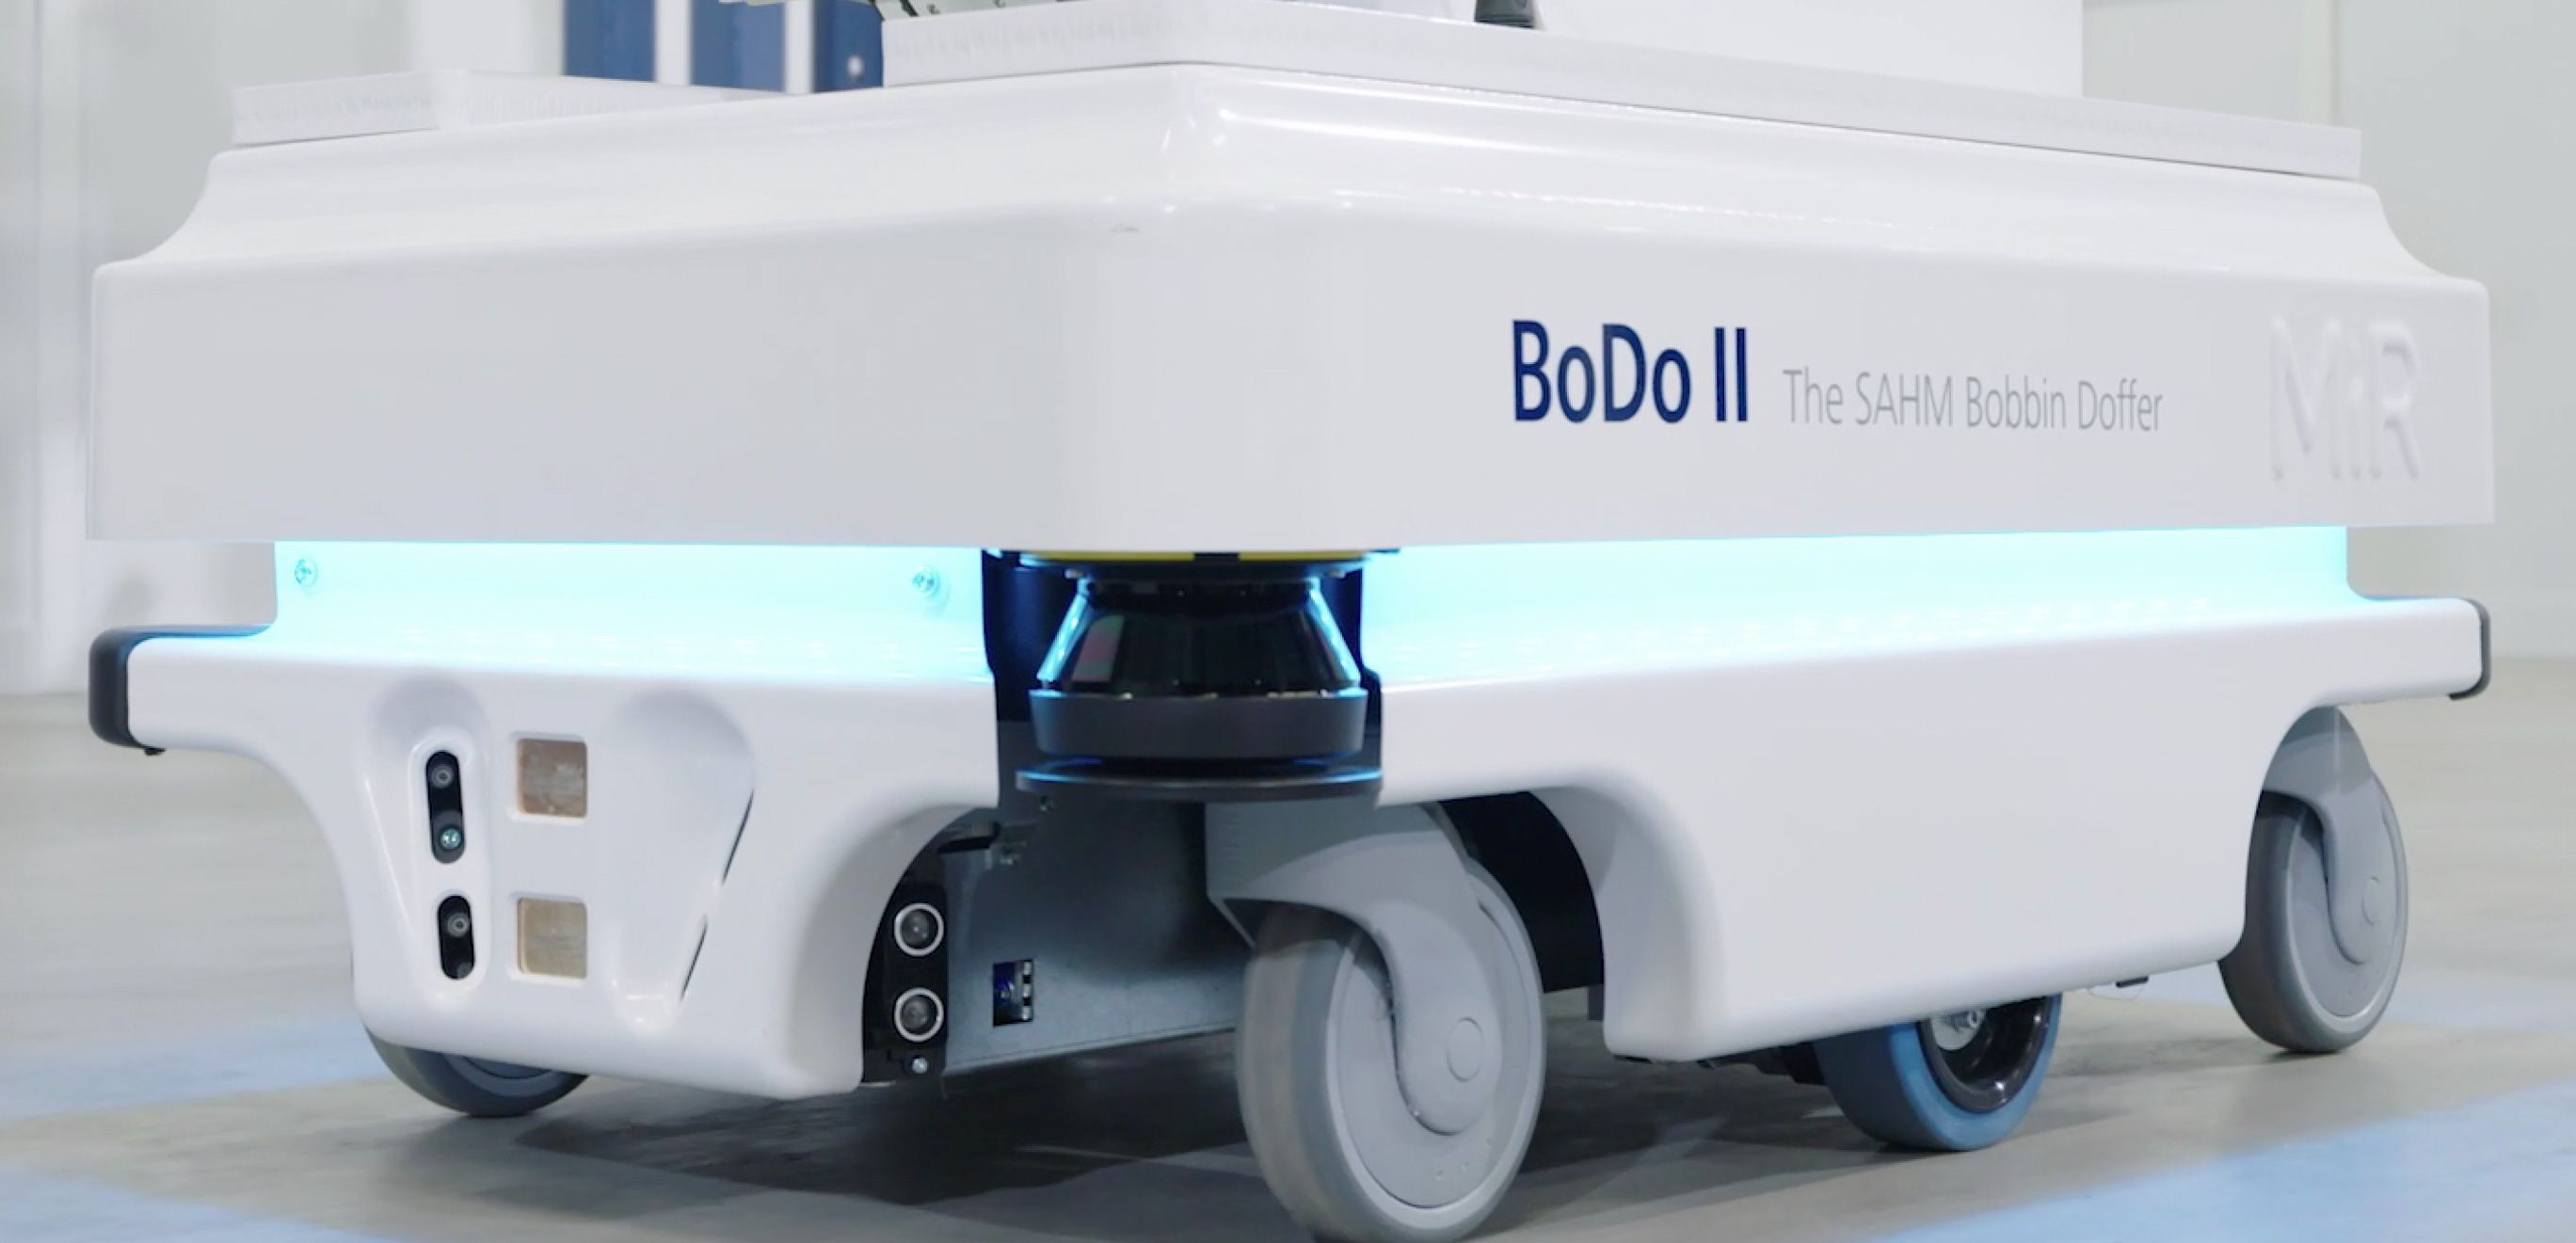 BoDo II's sensors and cameras